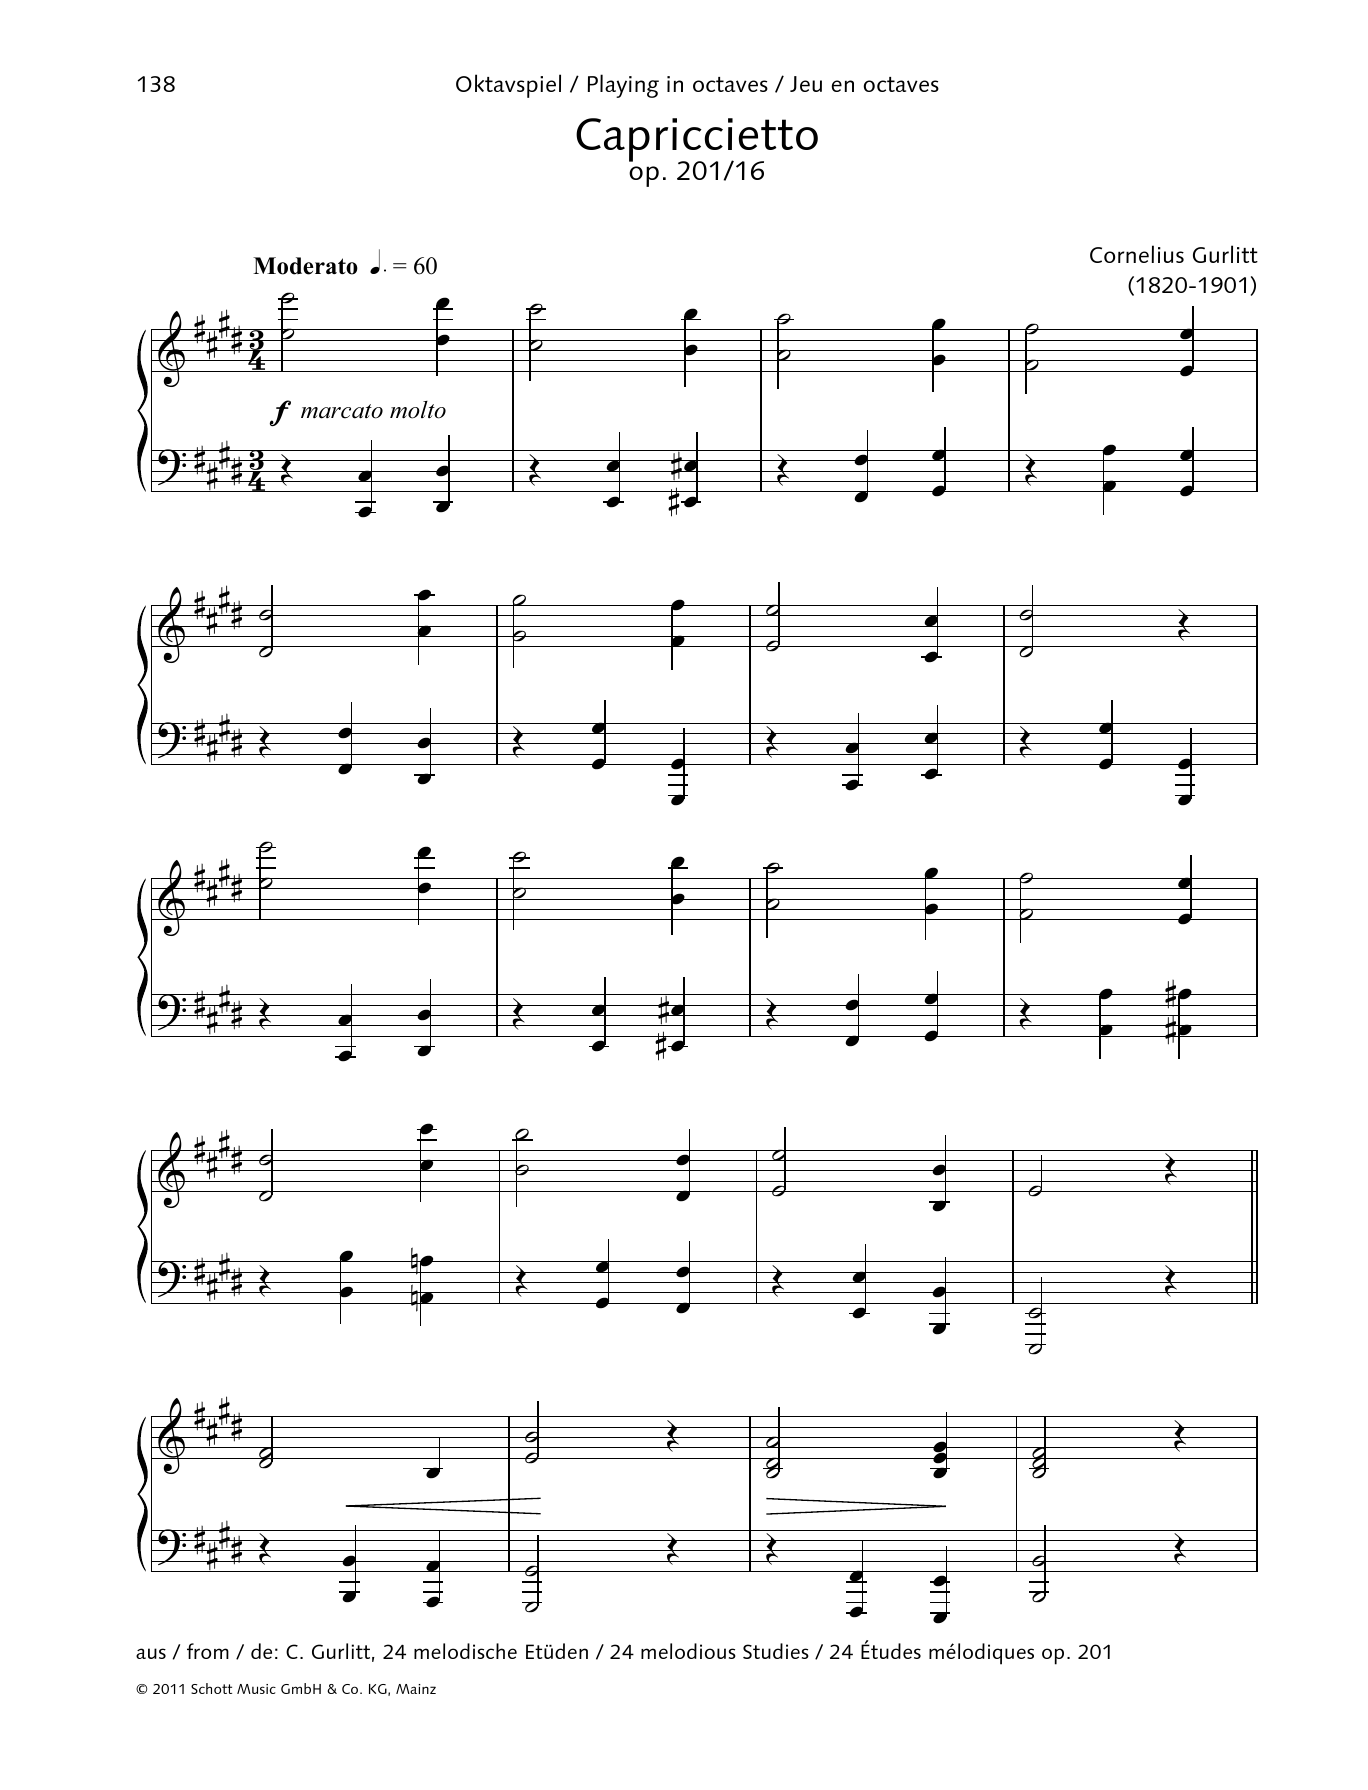 Cornelius Gurlitt Capriccietto Sheet Music Notes & Chords for Piano Solo - Download or Print PDF